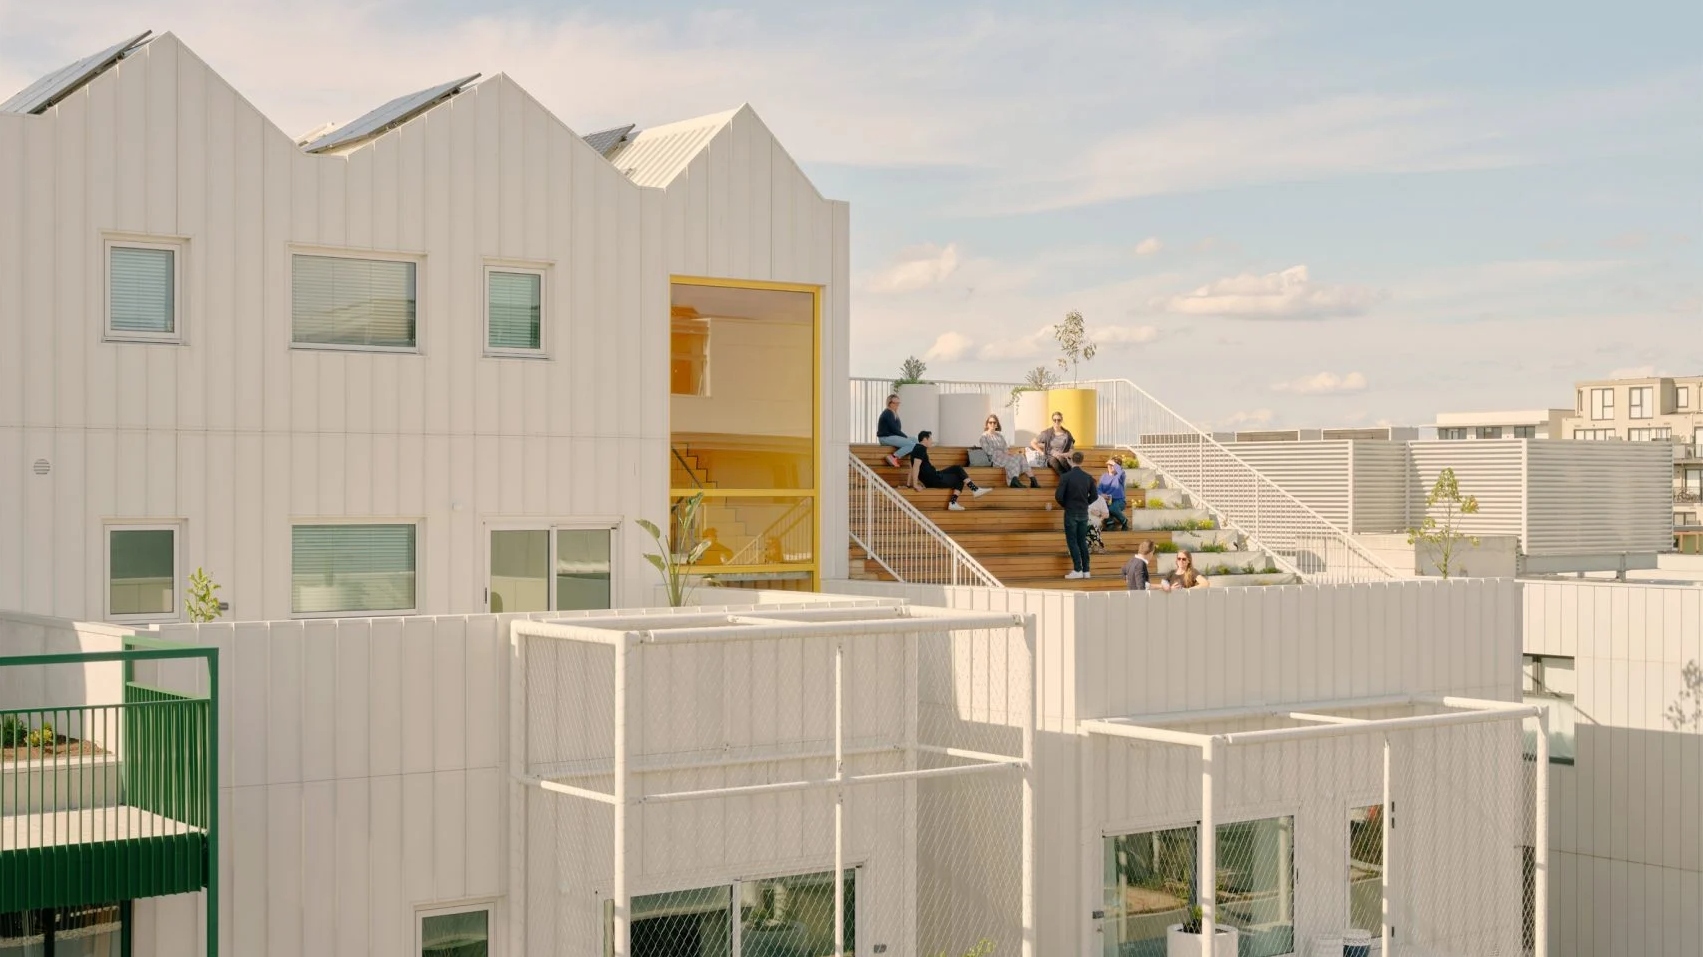 ParkLife Melbourne apartment block by Austin Maynard Architects